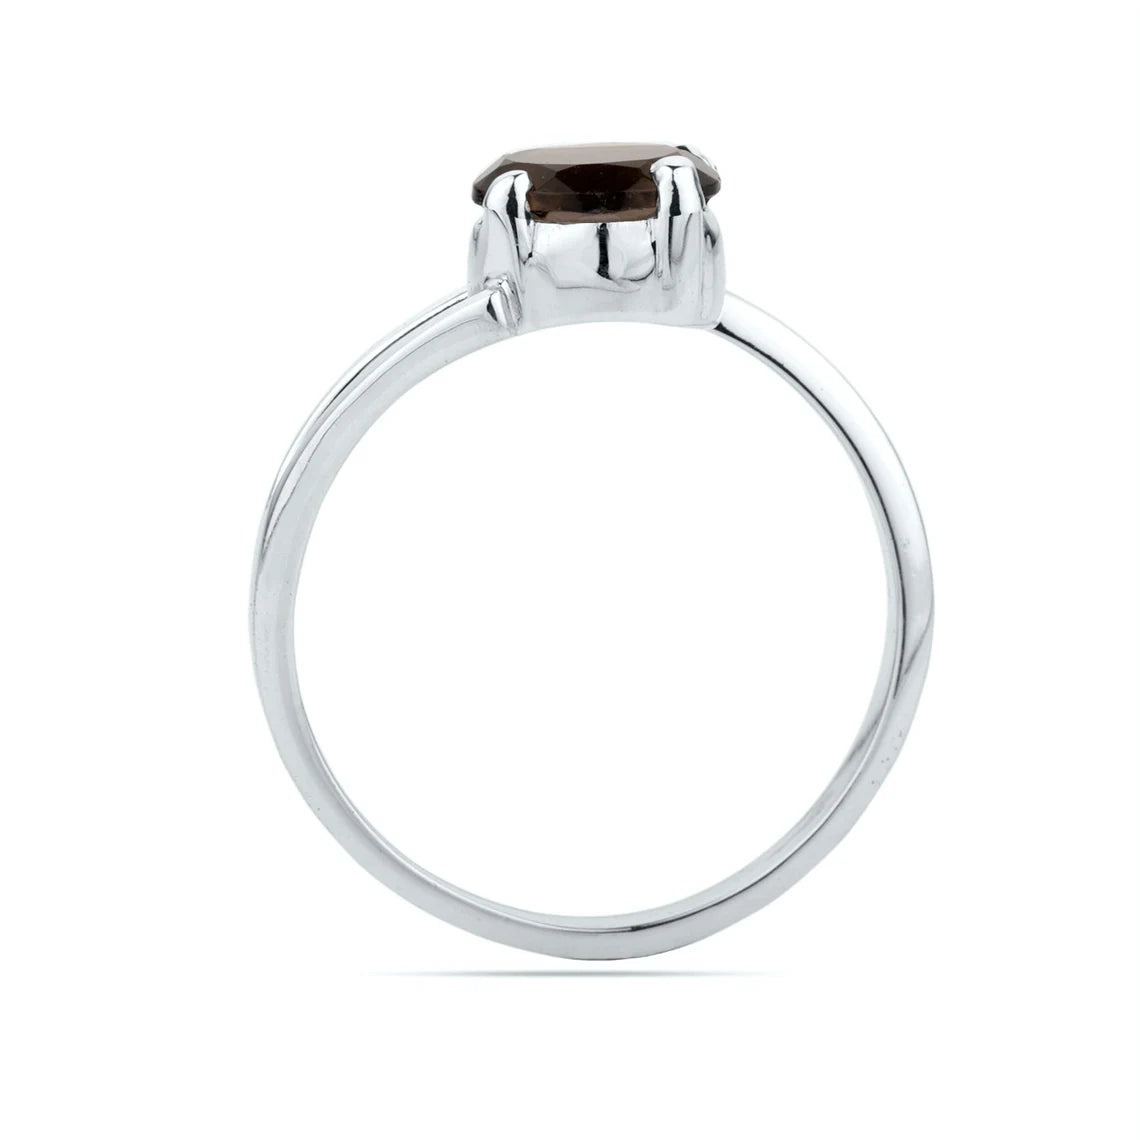 925 Sterling Silver Smoky Quartz Ring